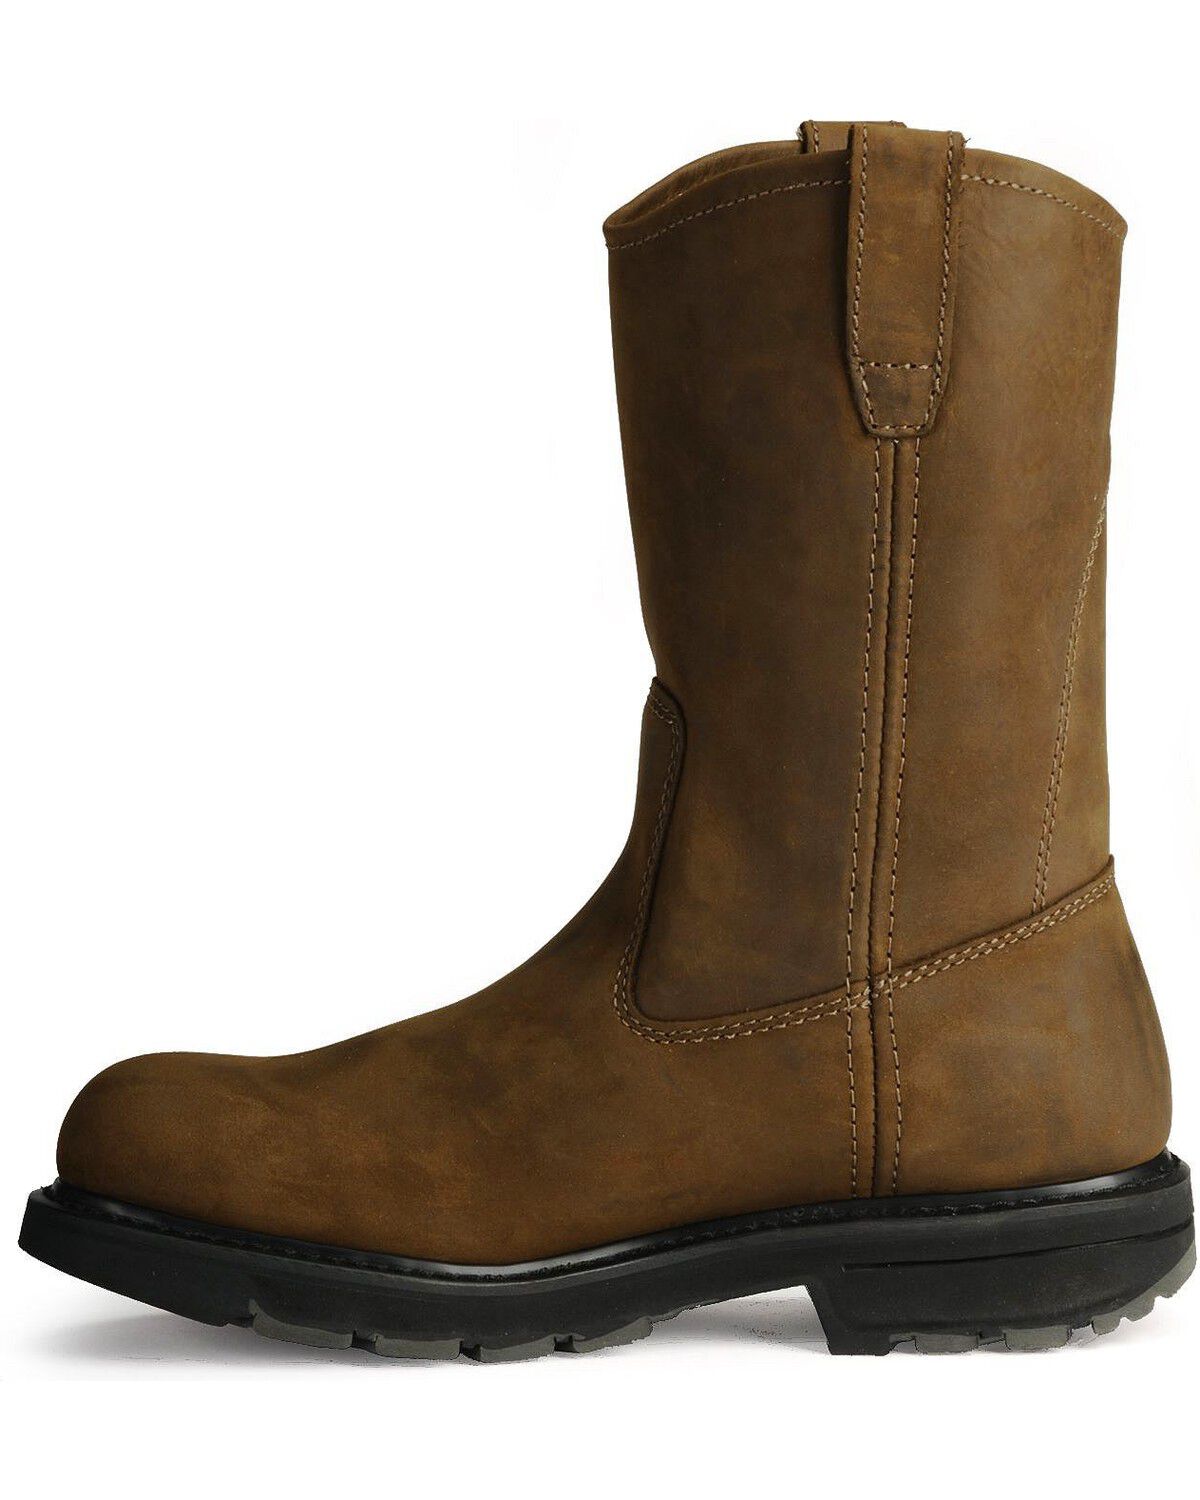 wolverine boots slip resistant